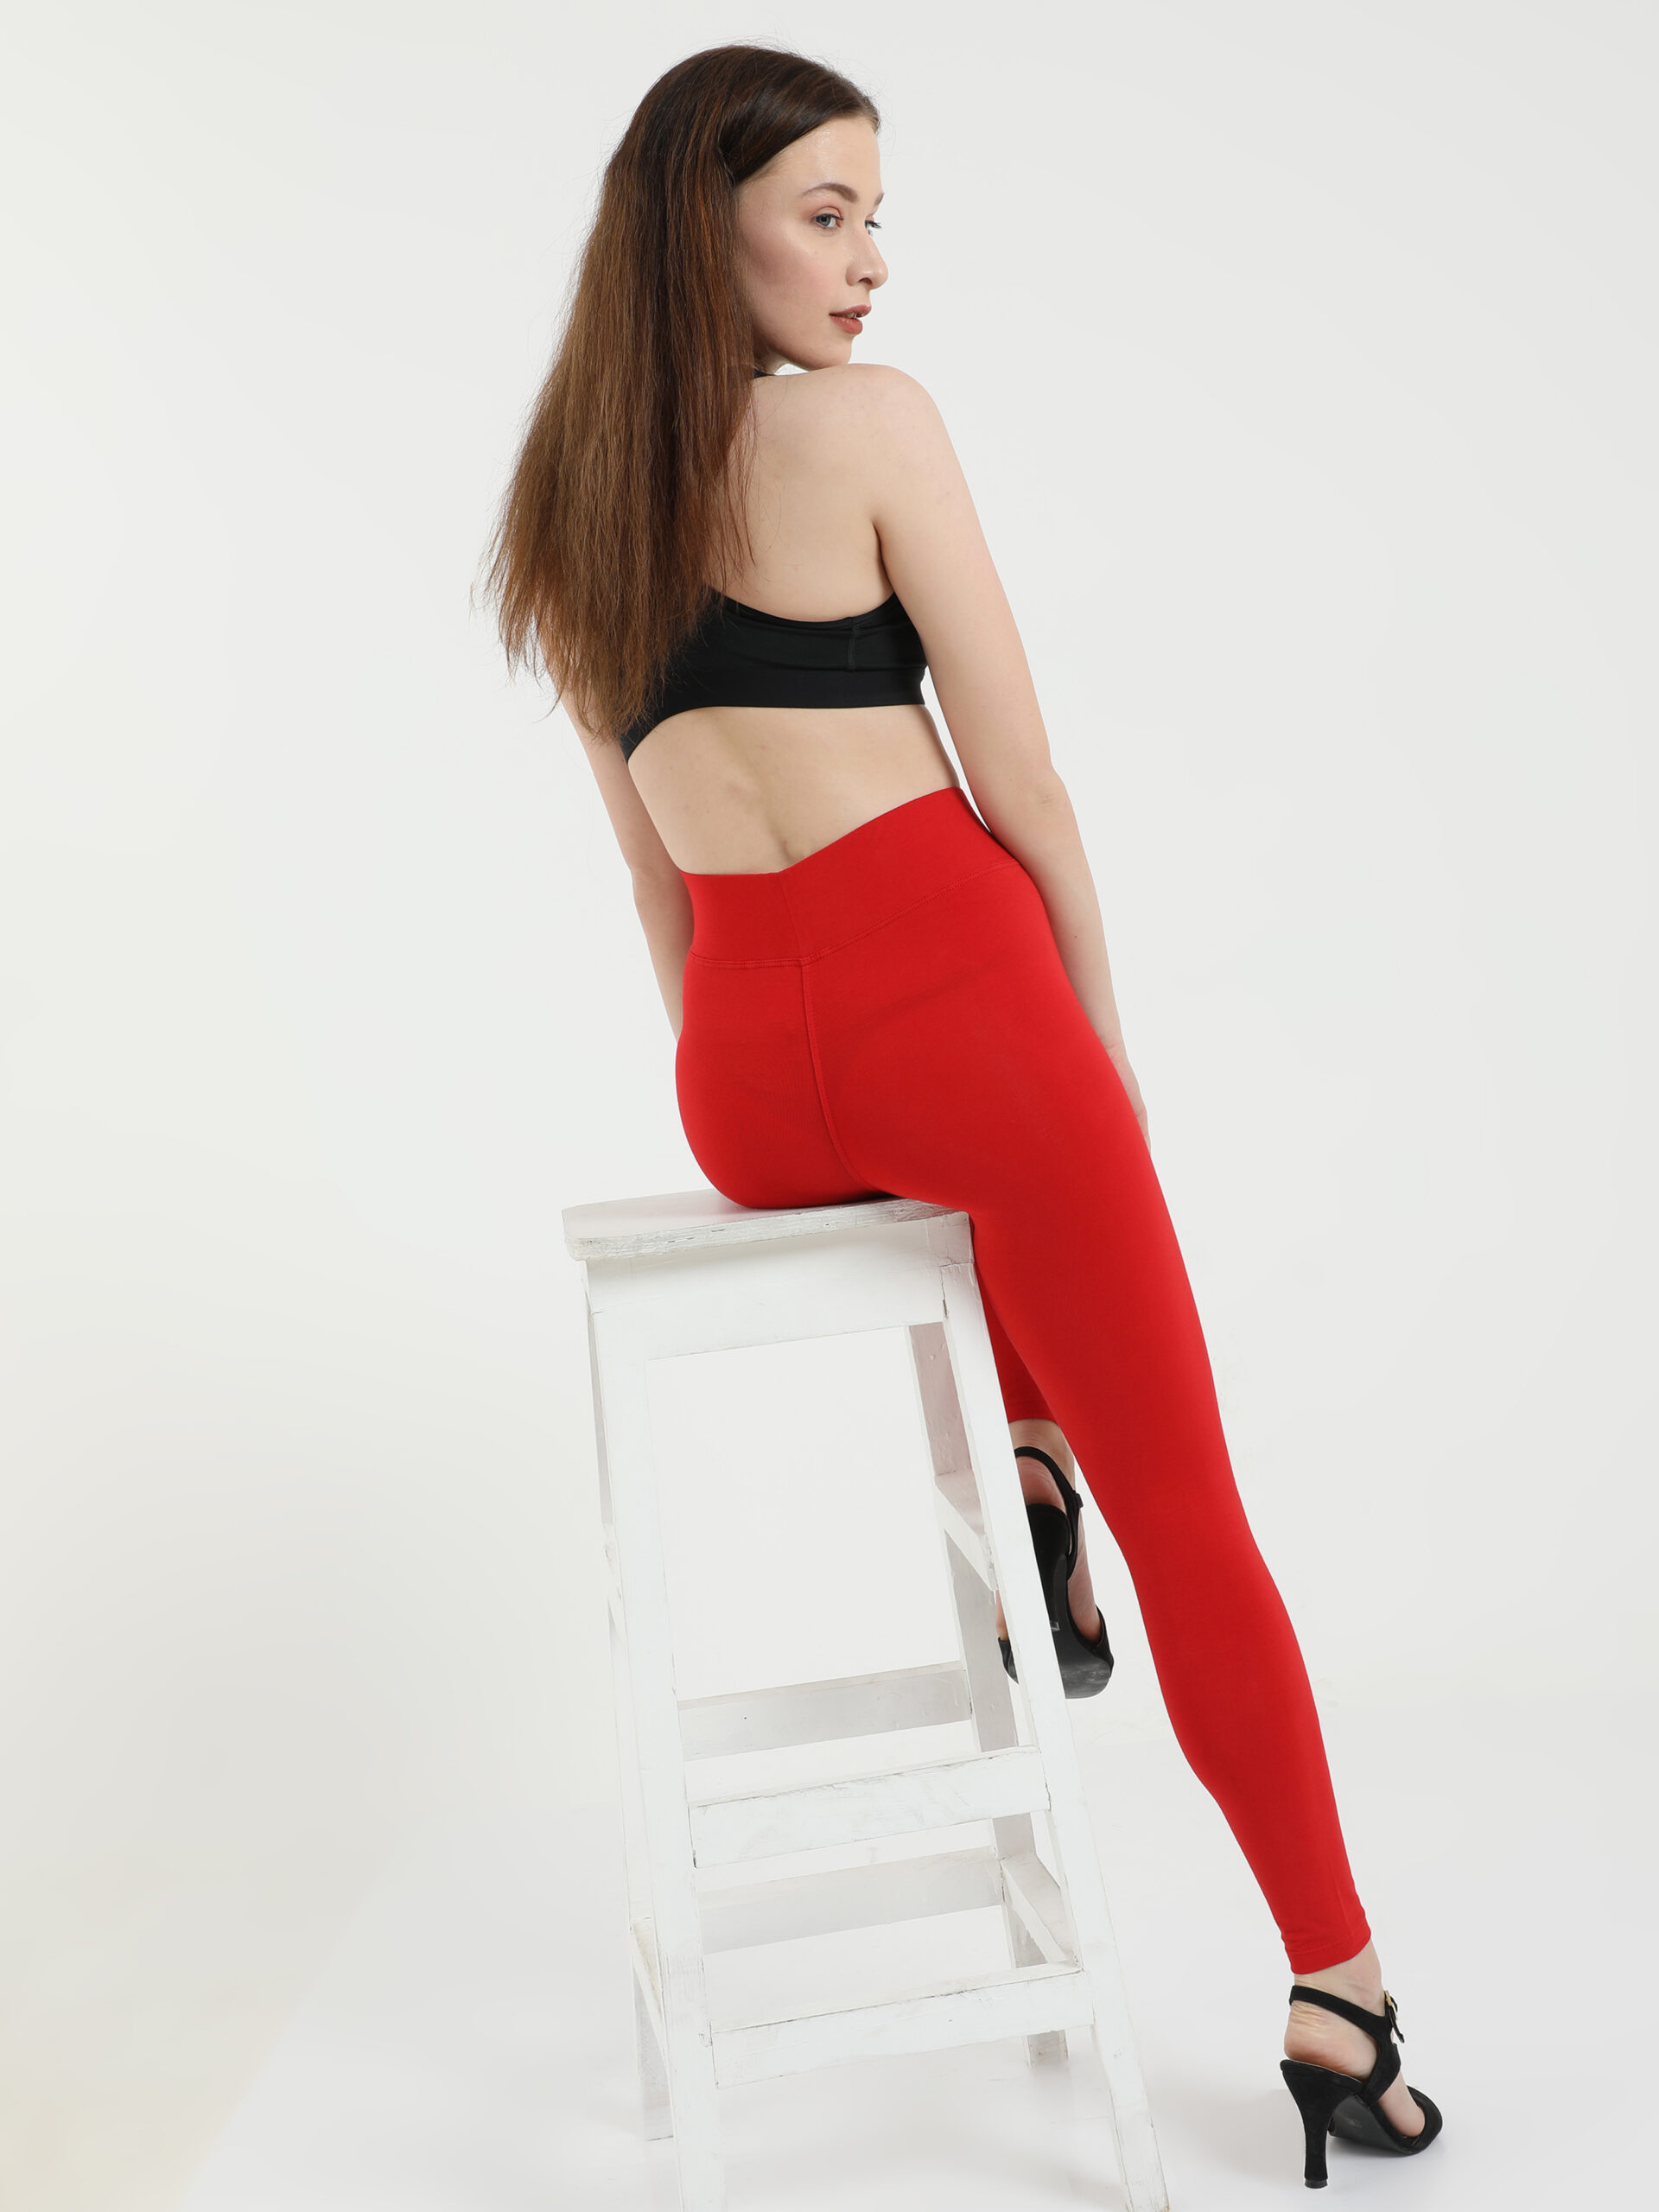 Red jeggings for women Compression pant 2 back pockets - Belore Slims